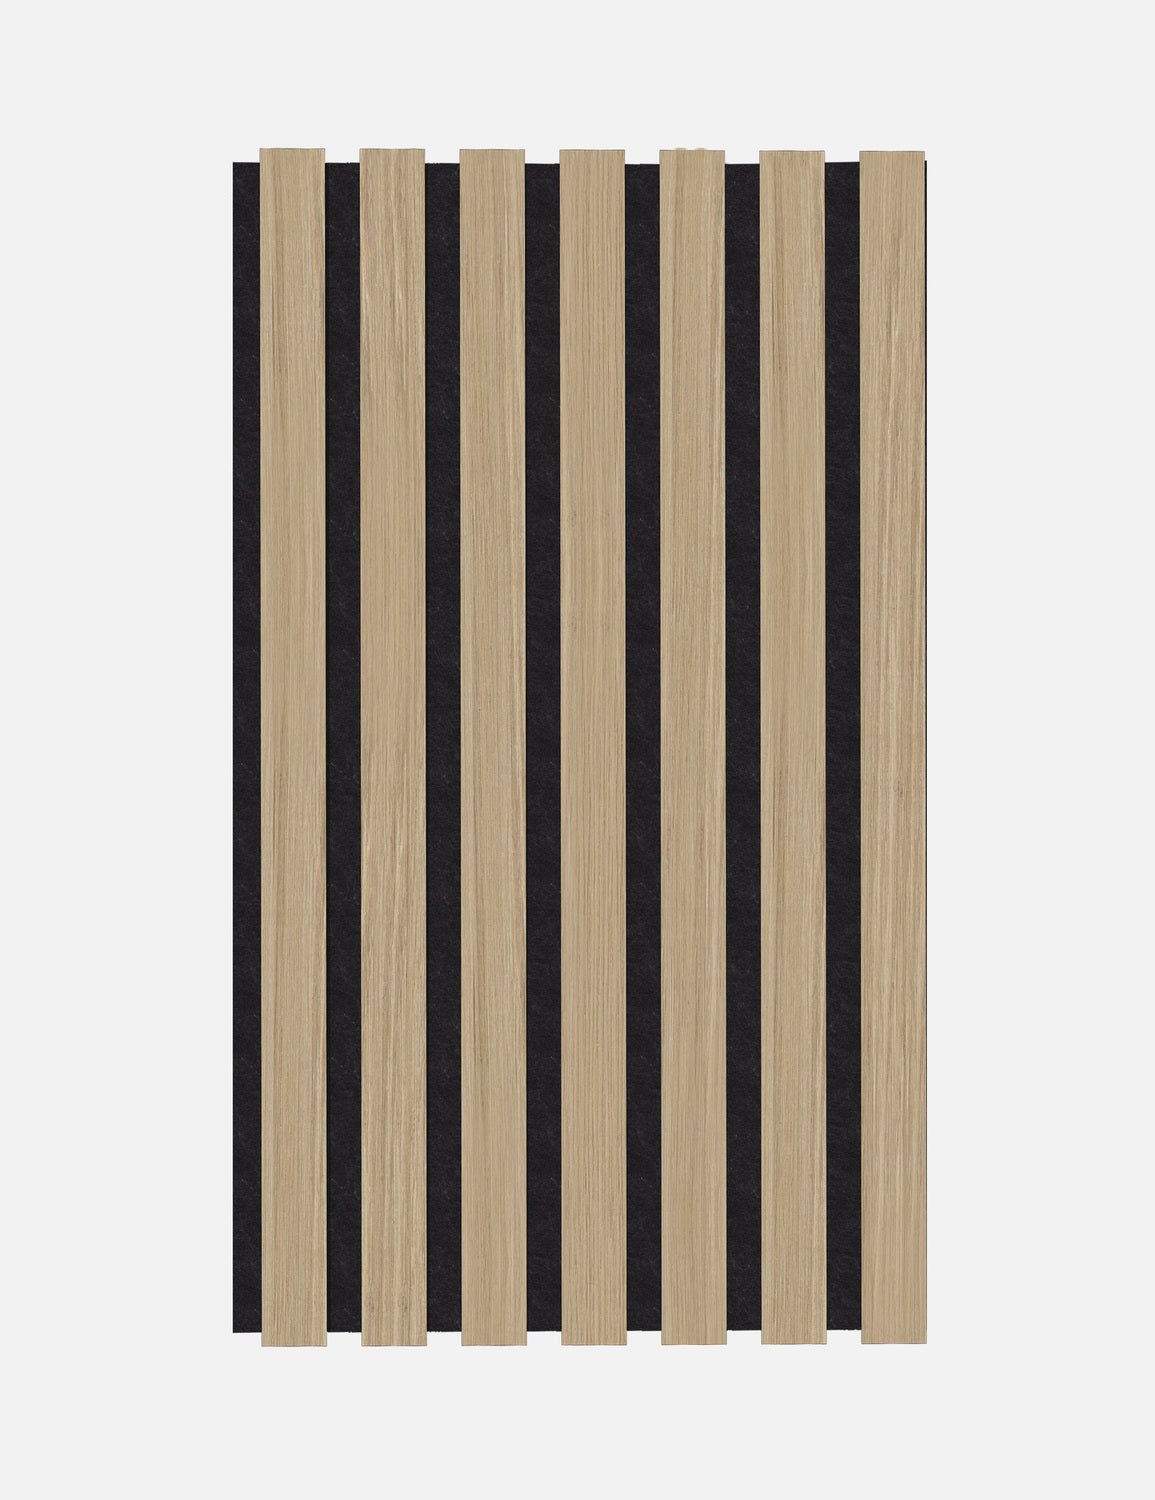 Muster Eiche MDF Schwarz Holzig Plus - 20x12x1,9cm